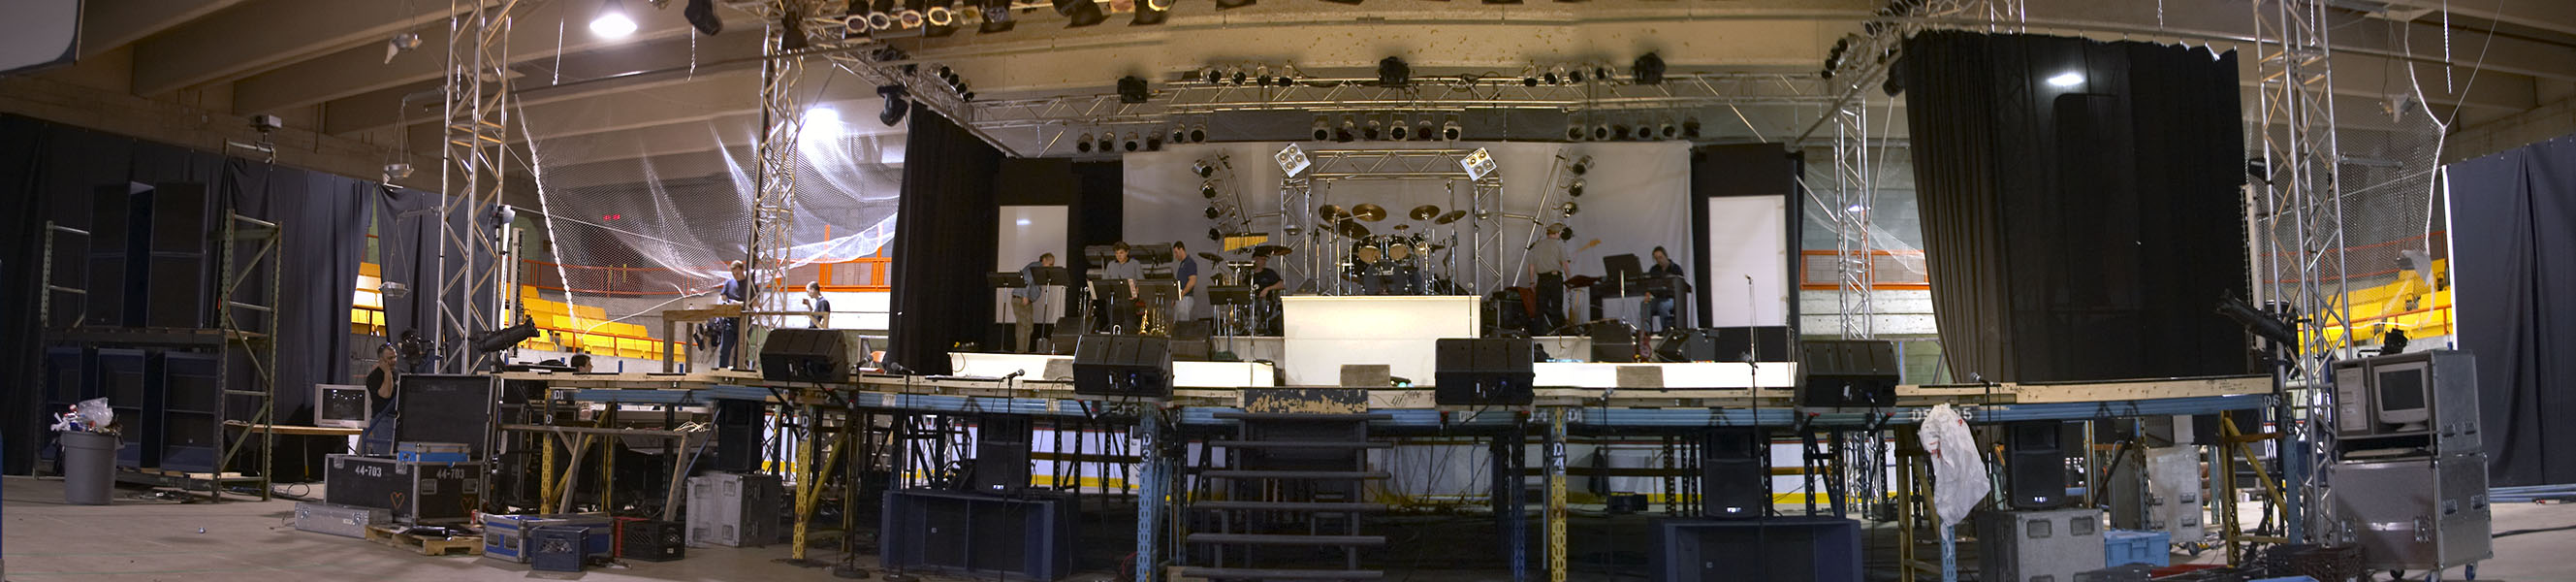 Arena/Stage Setup Panorama